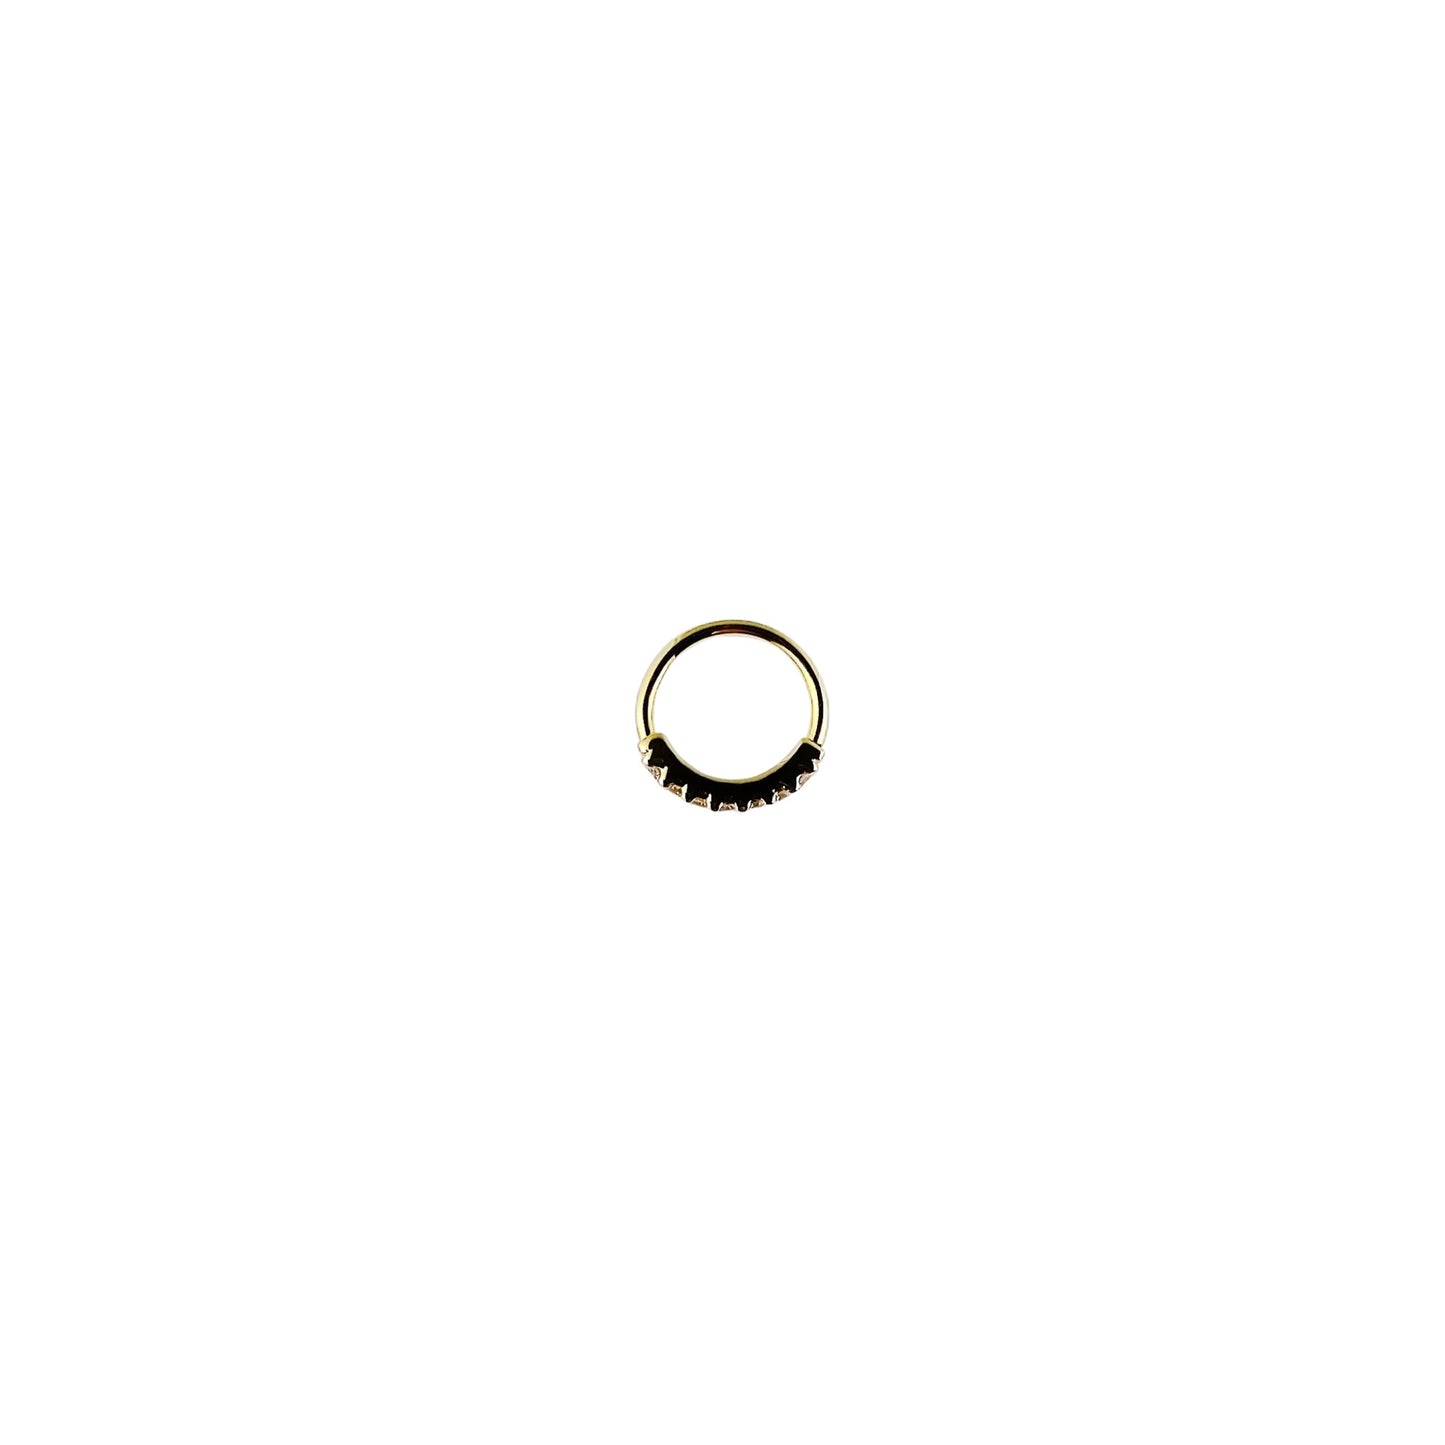 Outward-Facing FIxed 7-Gem Seam Ring